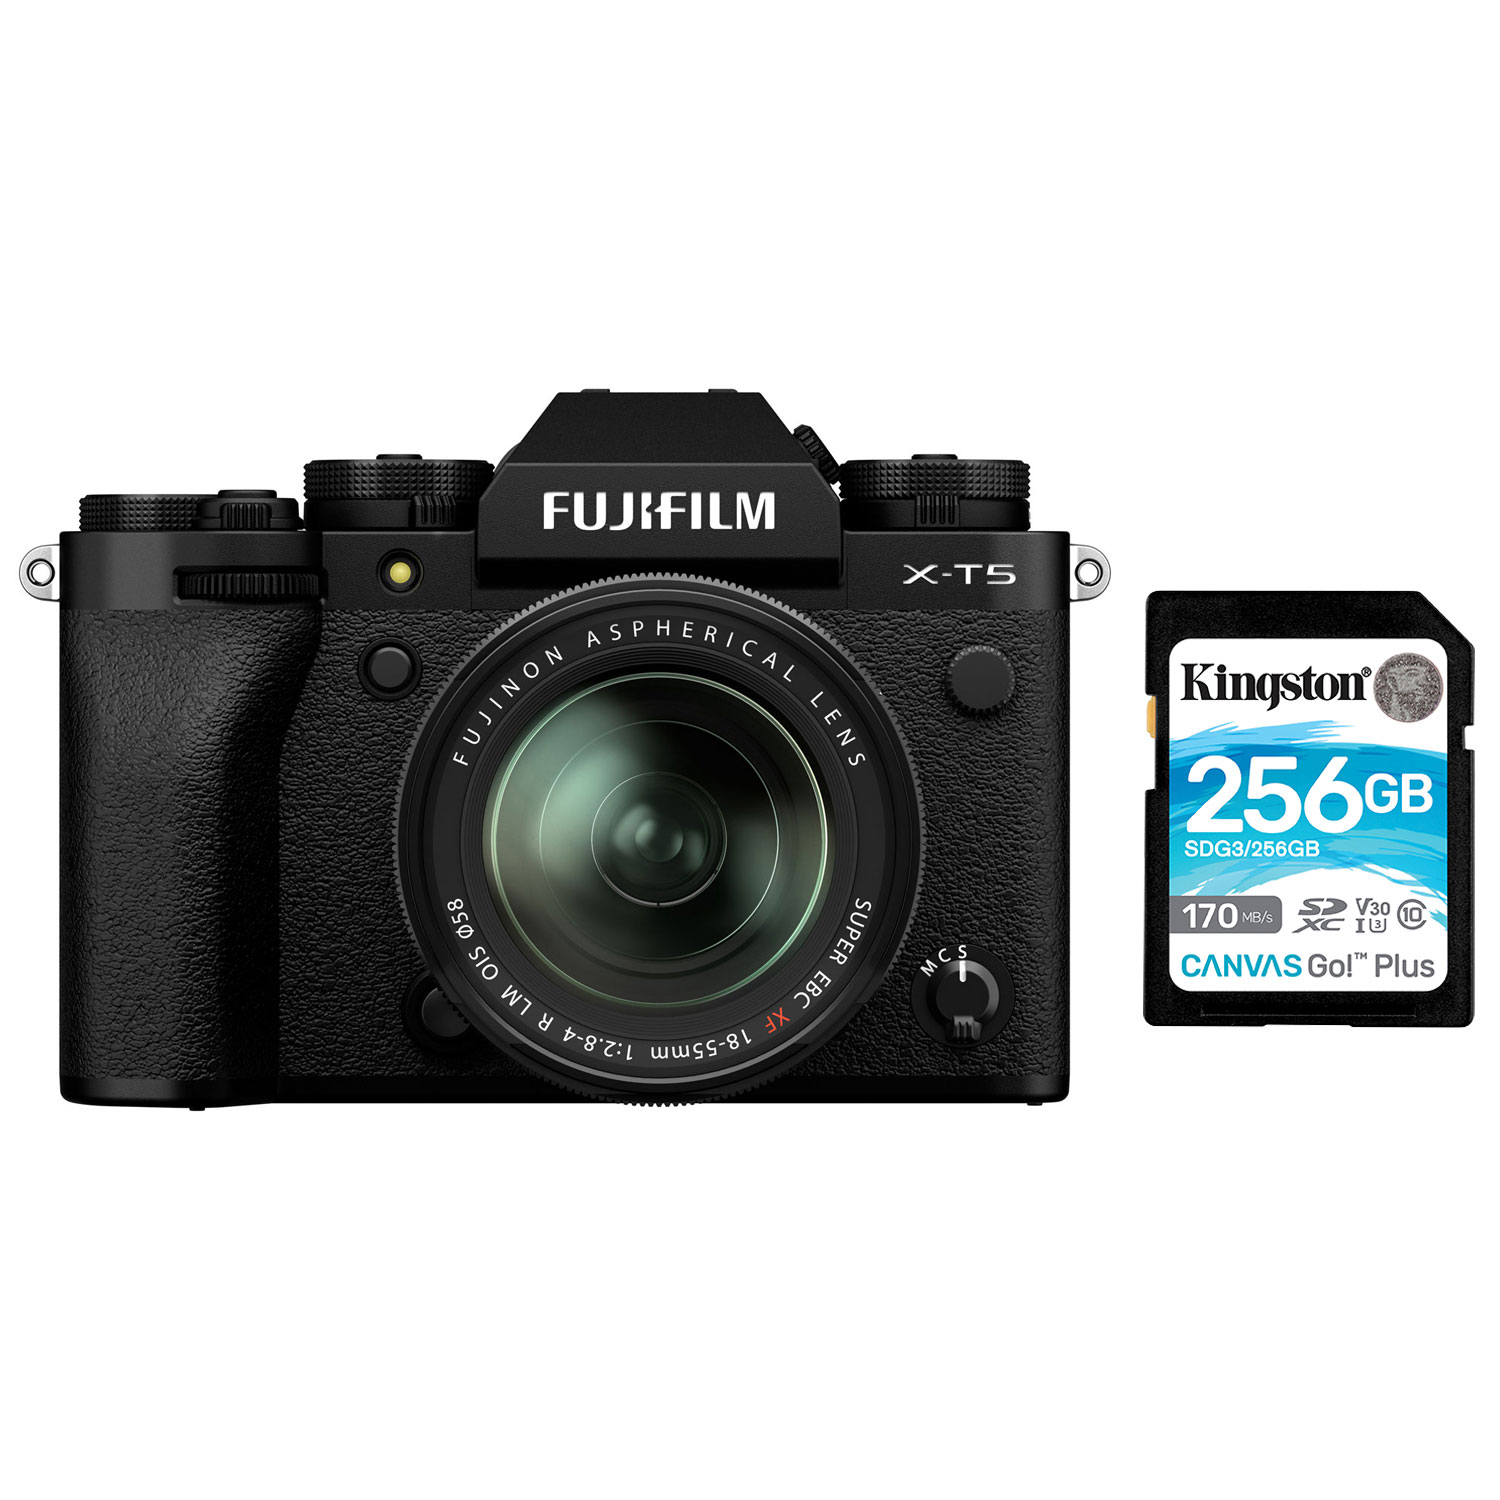 Fujifilm X-T5 Mirrorless Camera with XF 18-55mm f/2.8-4 R LM OIS Lens Kit & 256GB SDXC Memory Card